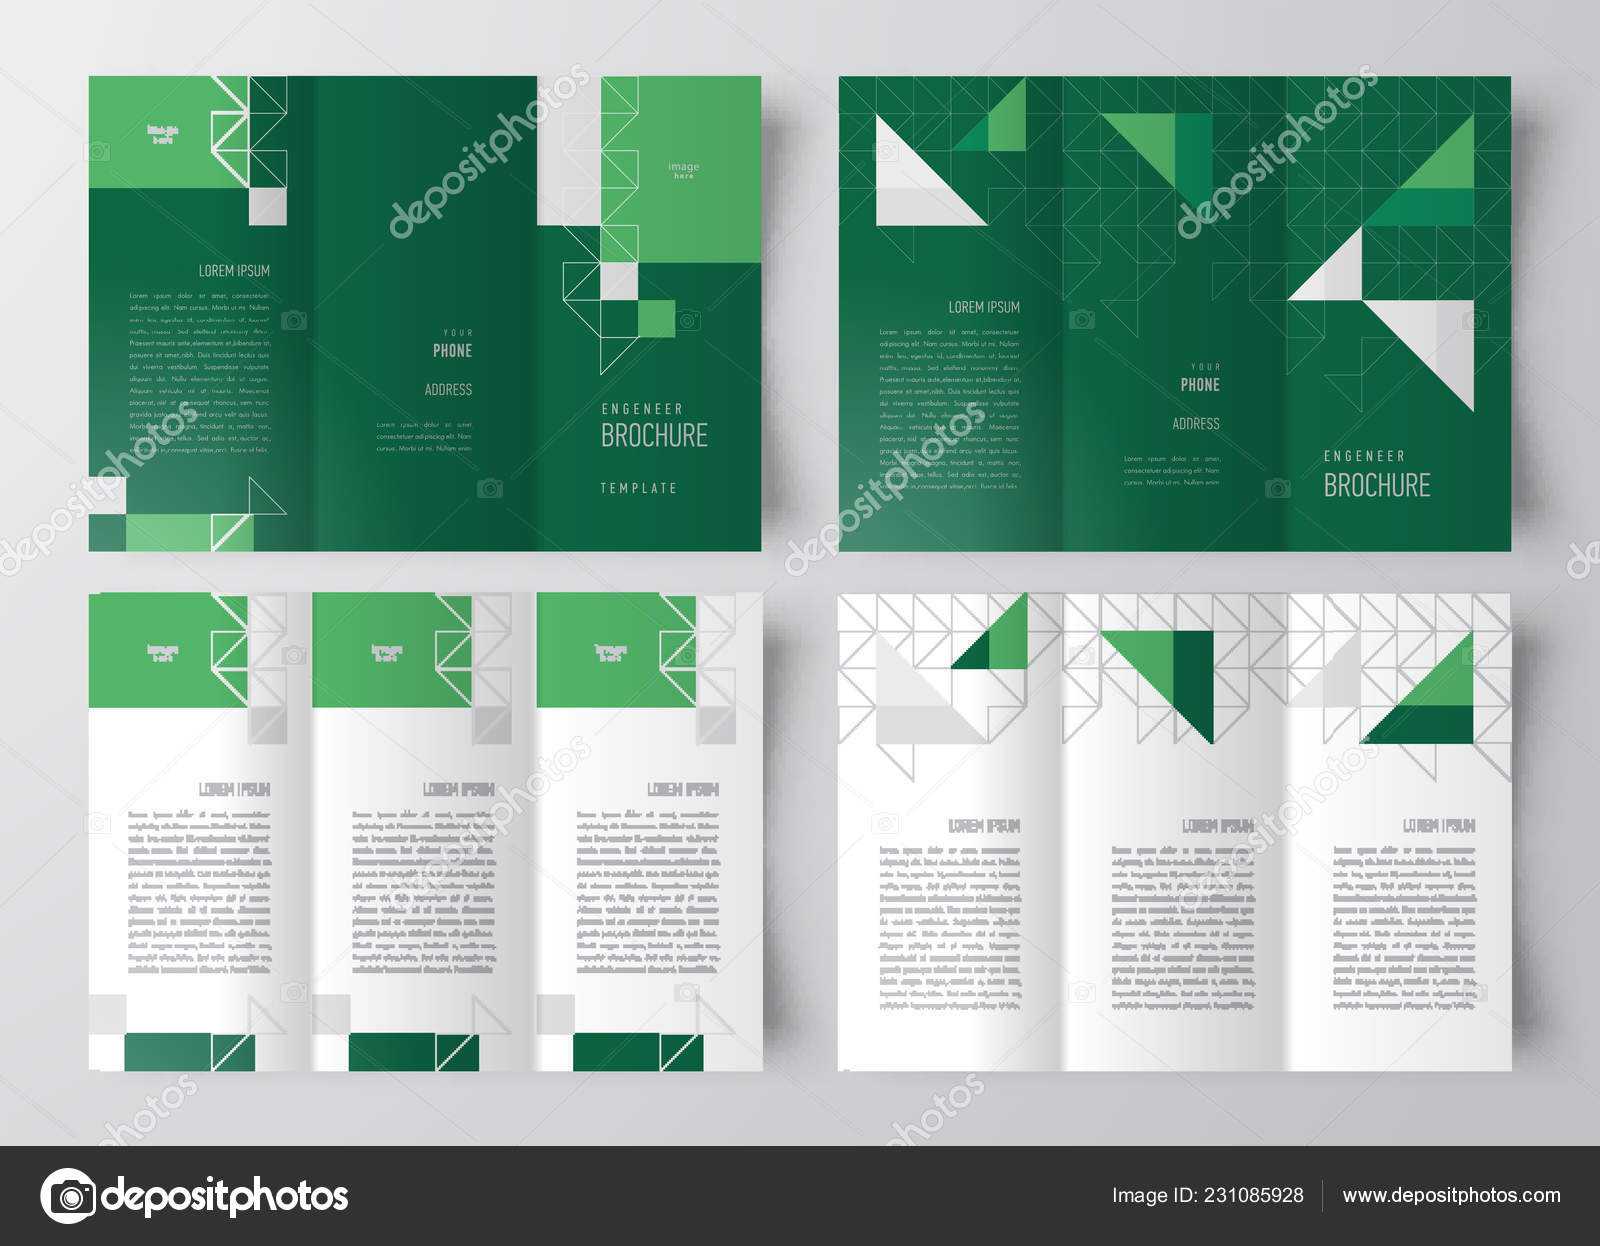 Brochure Design Template Engineering Abstract Triangles For Engineering Brochure Templates